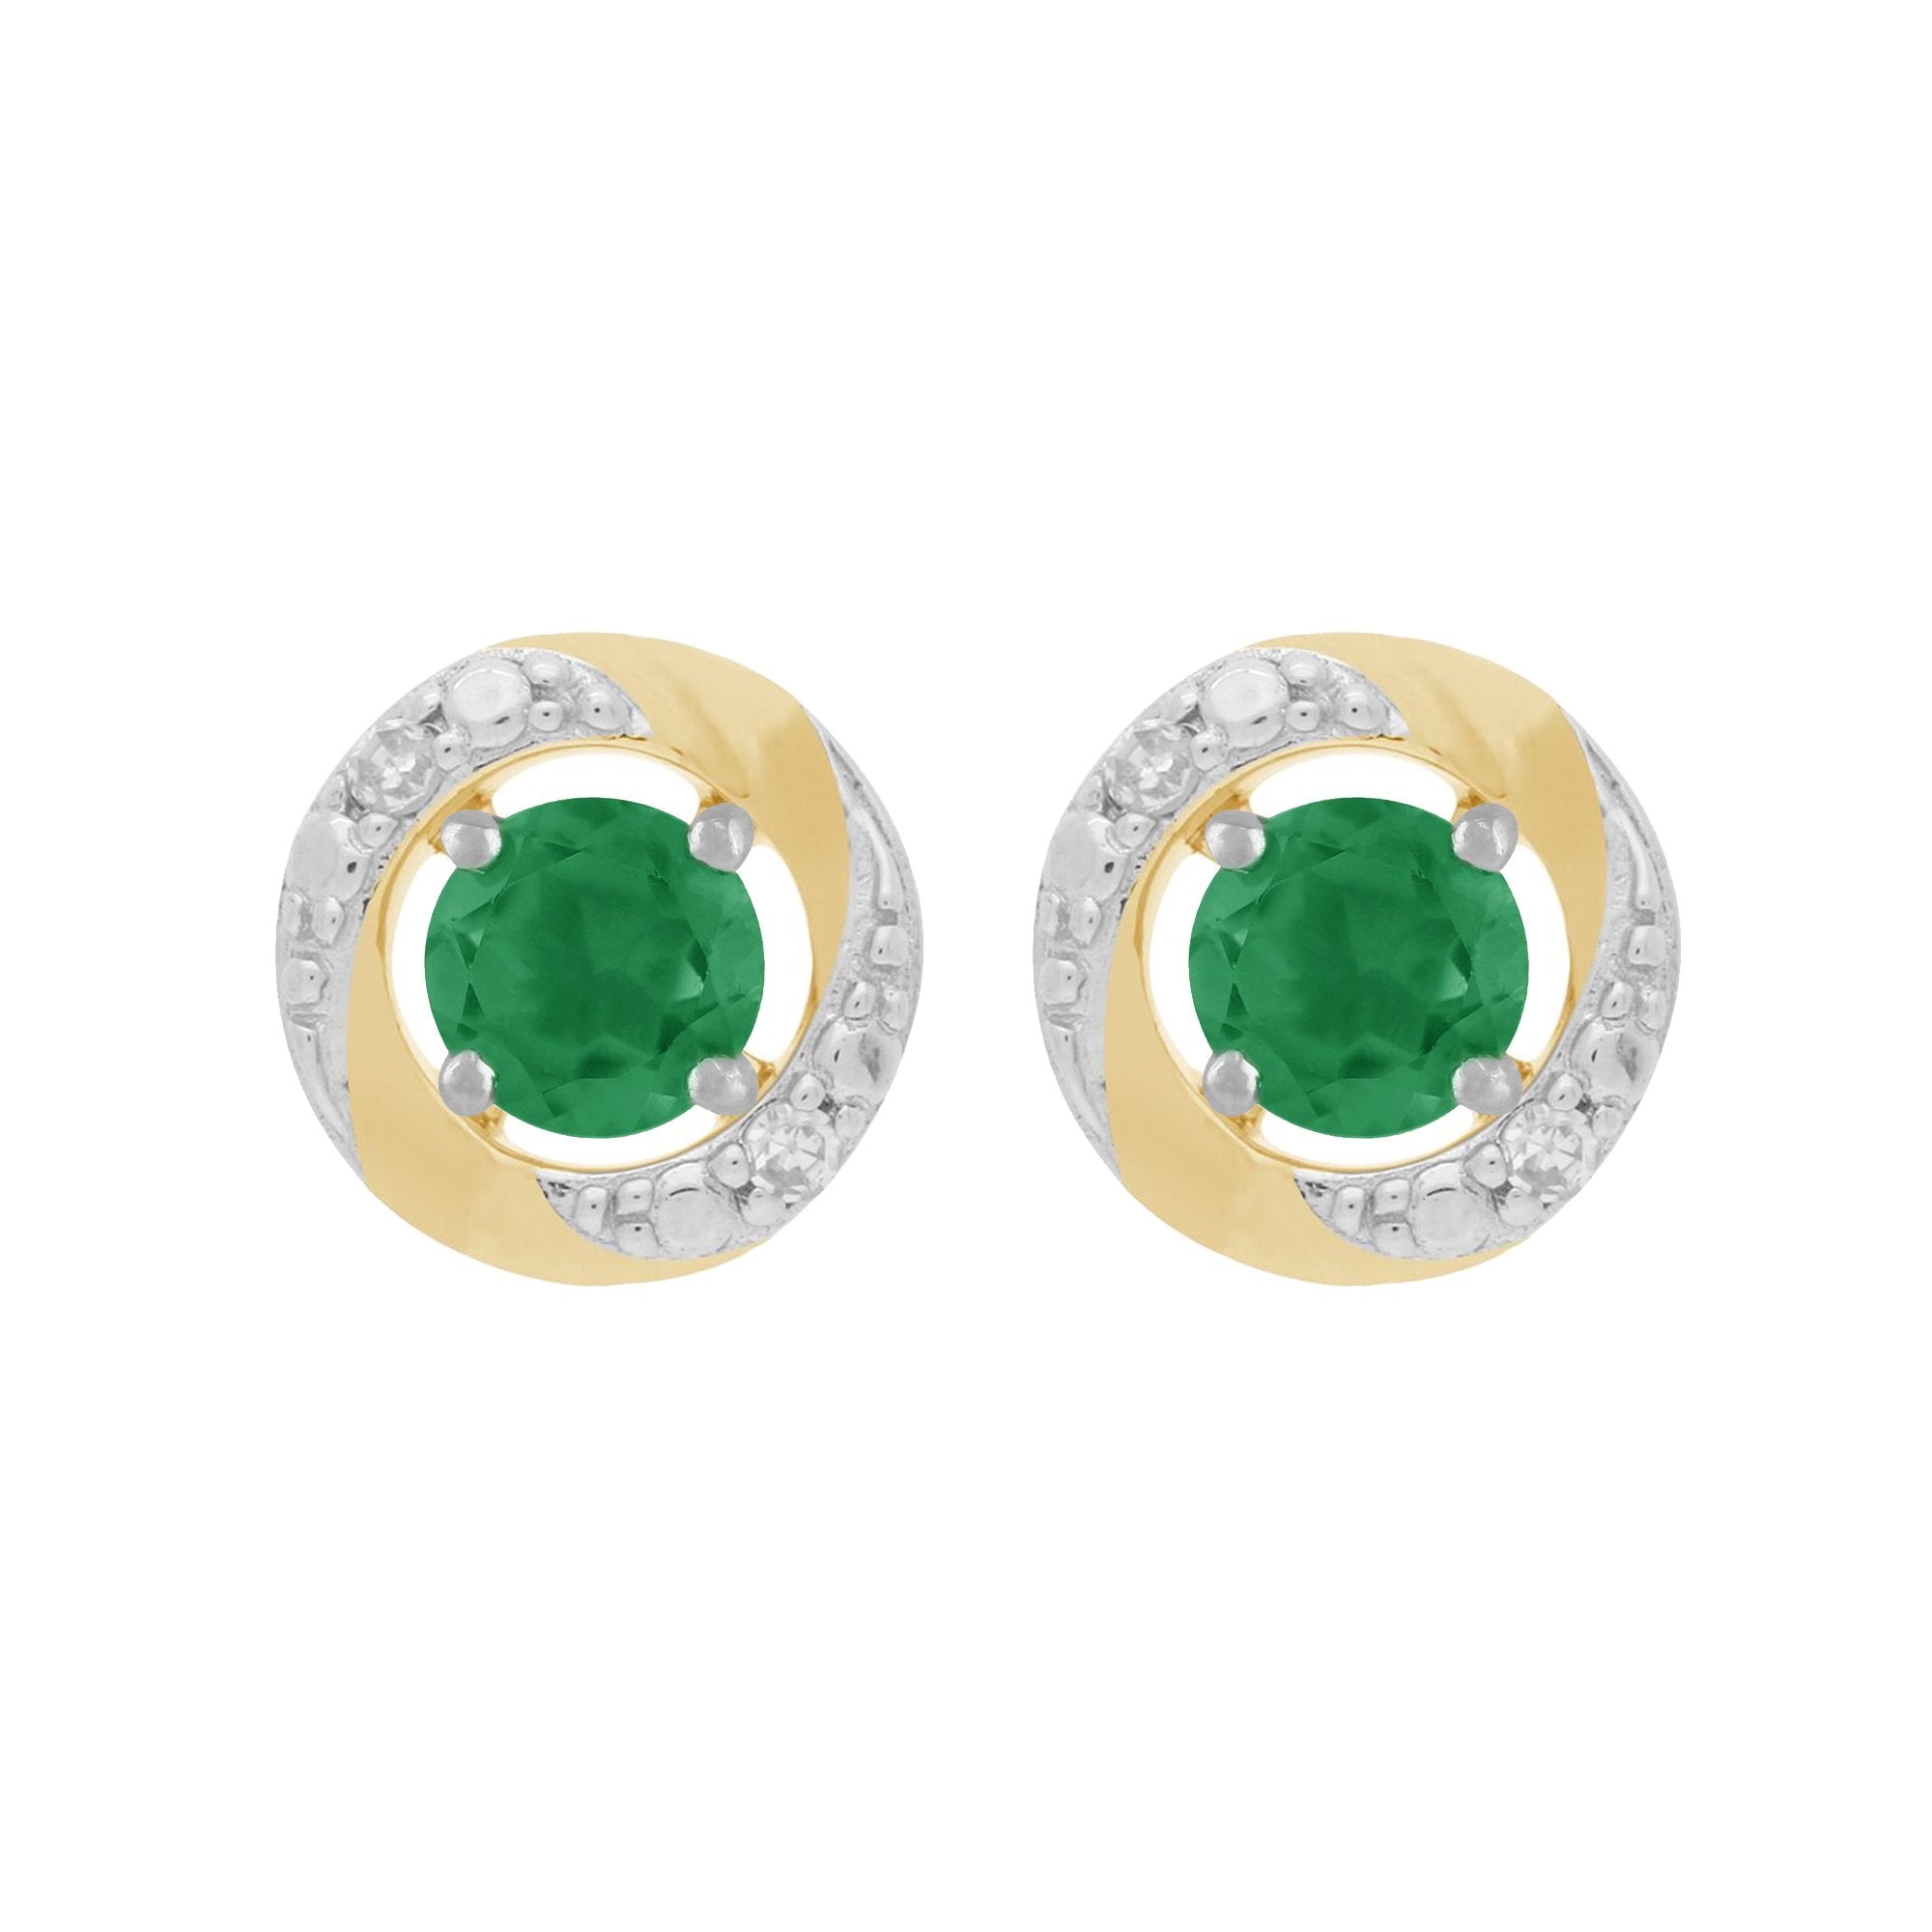 9ct White Gold Emerald Stud Earrings & Diamond Halo Ear Jacket Image 1 